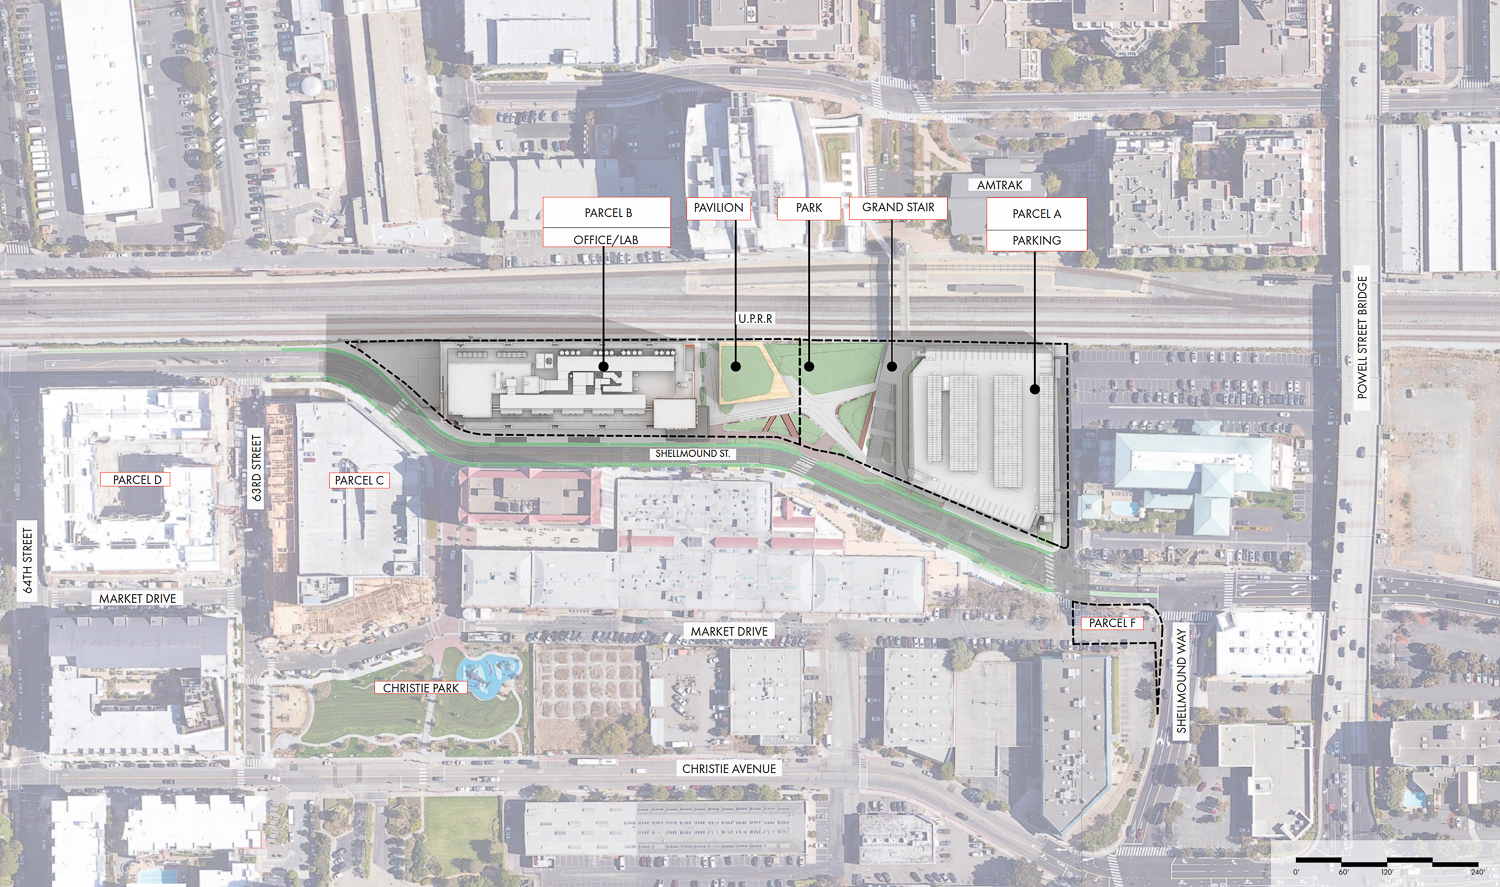 Emeryville Public Market aerial overview, site map via HDR